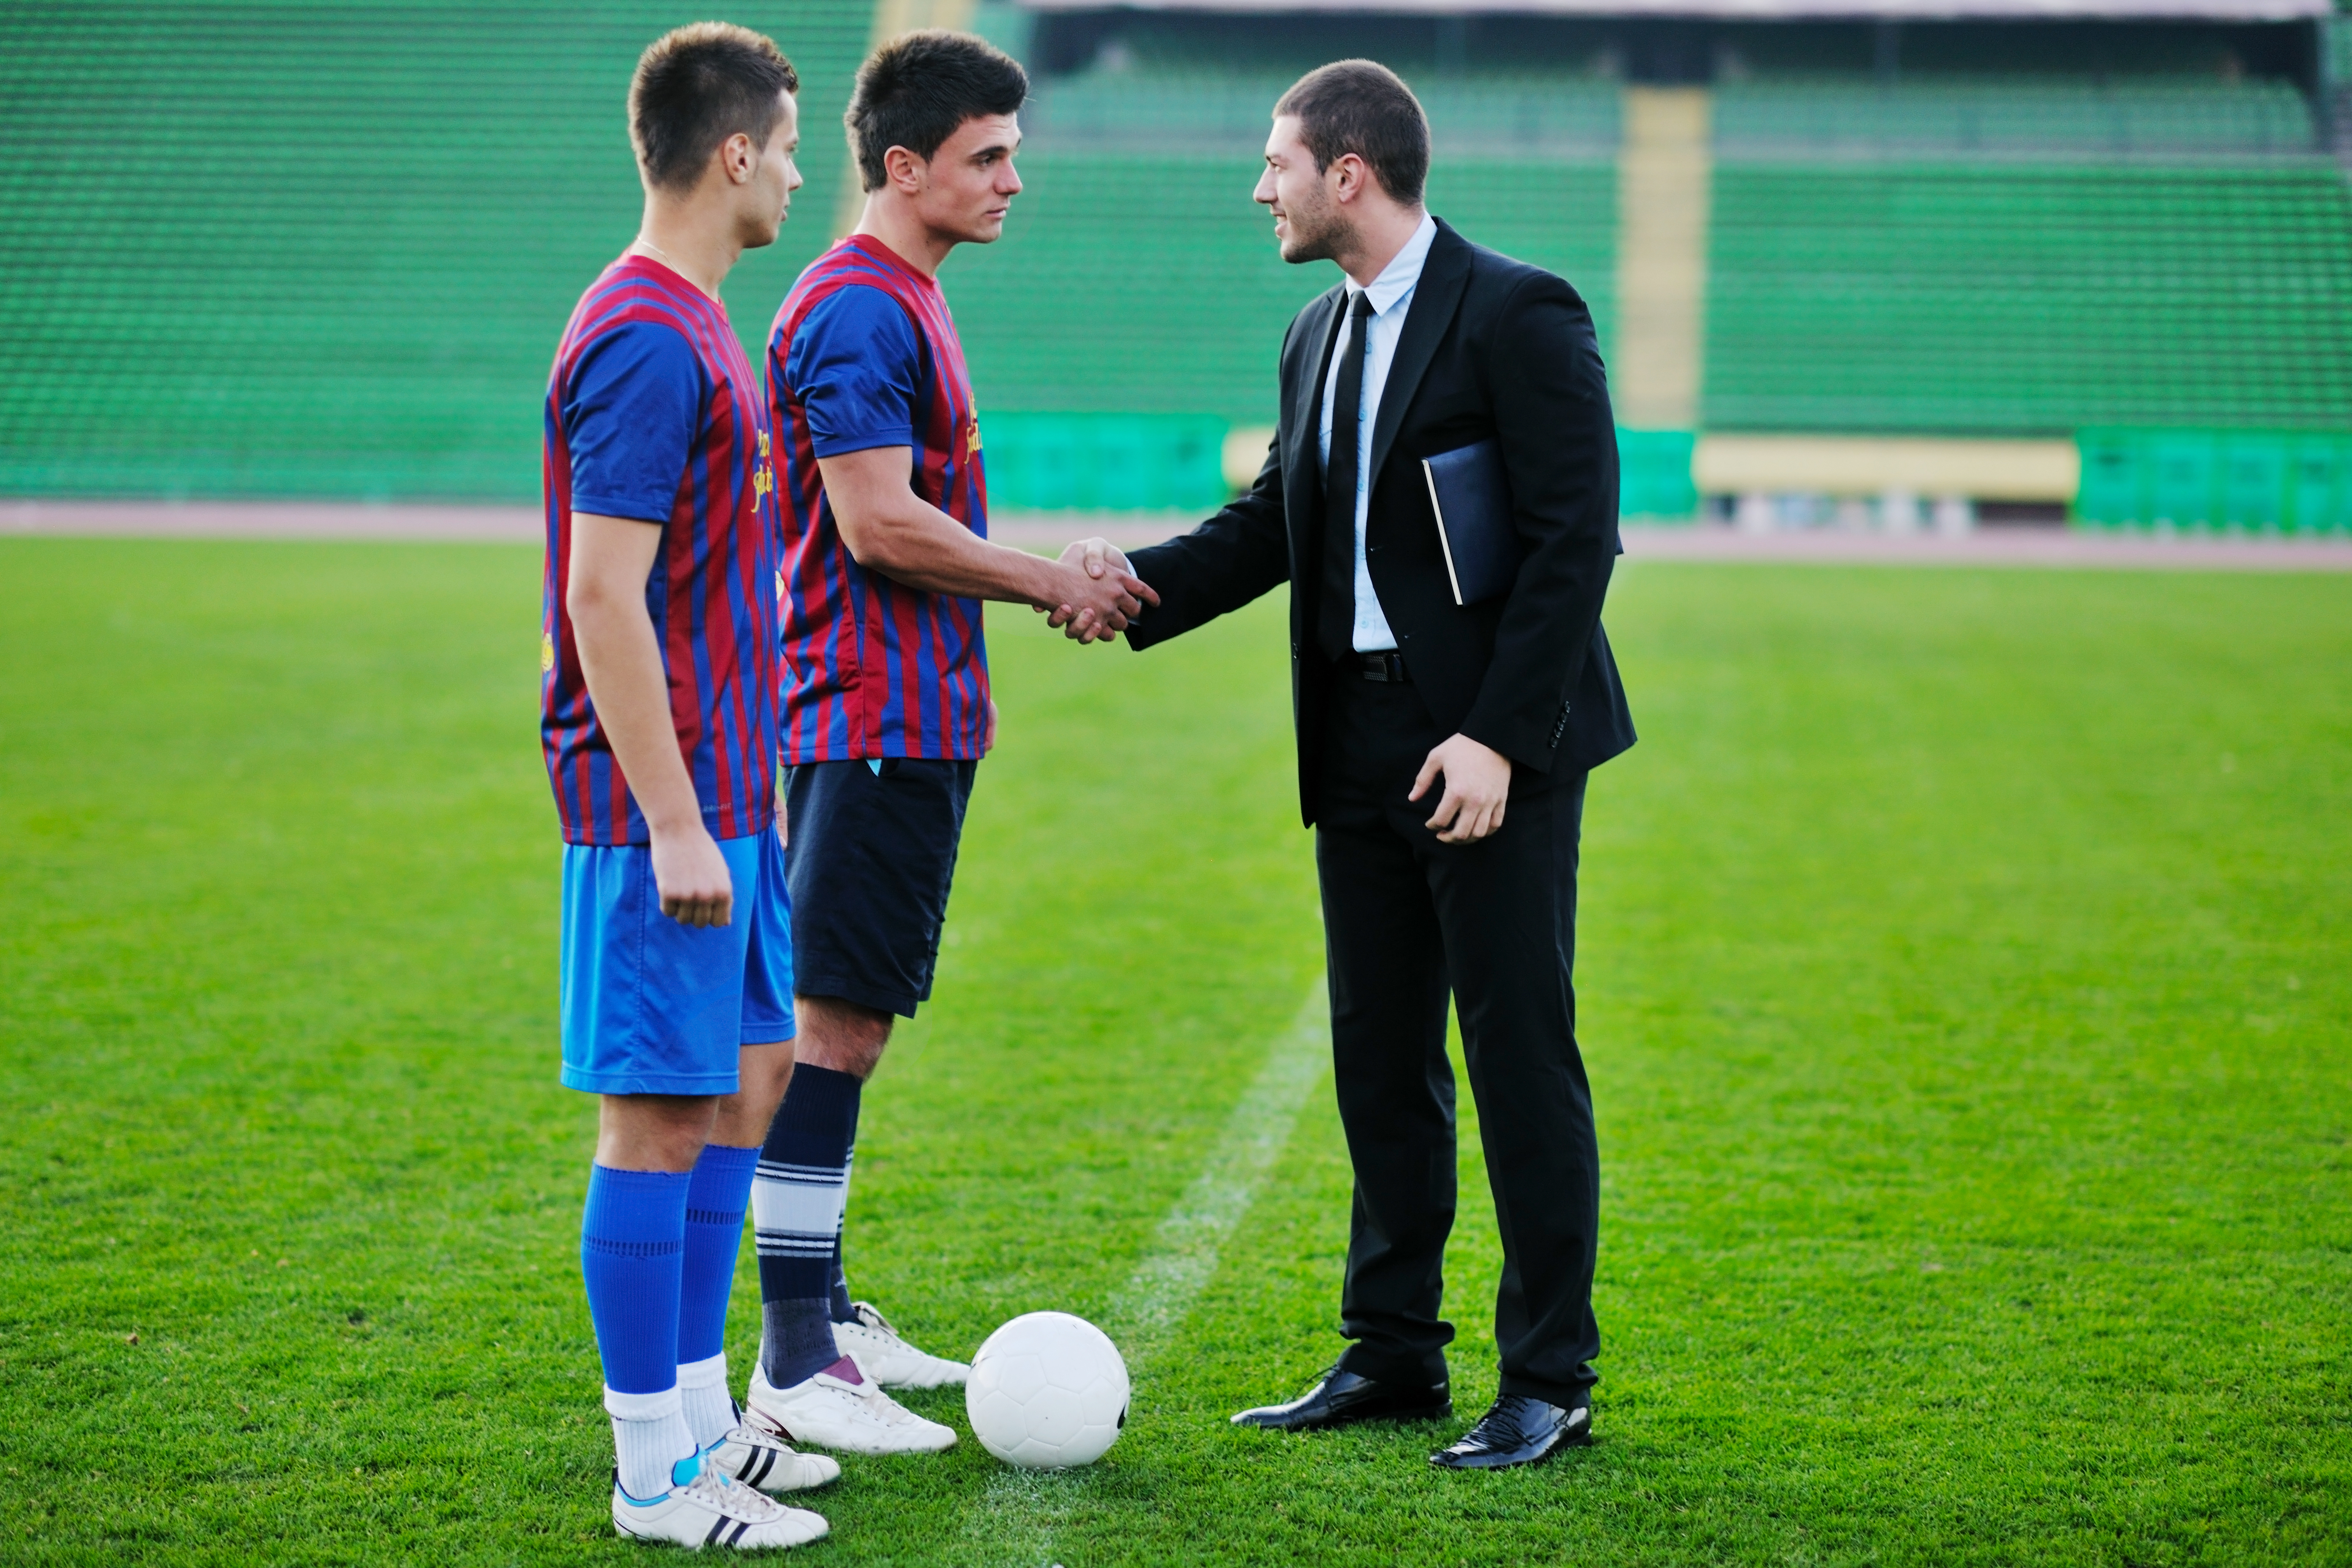 Two men shaking hands on a soccer field